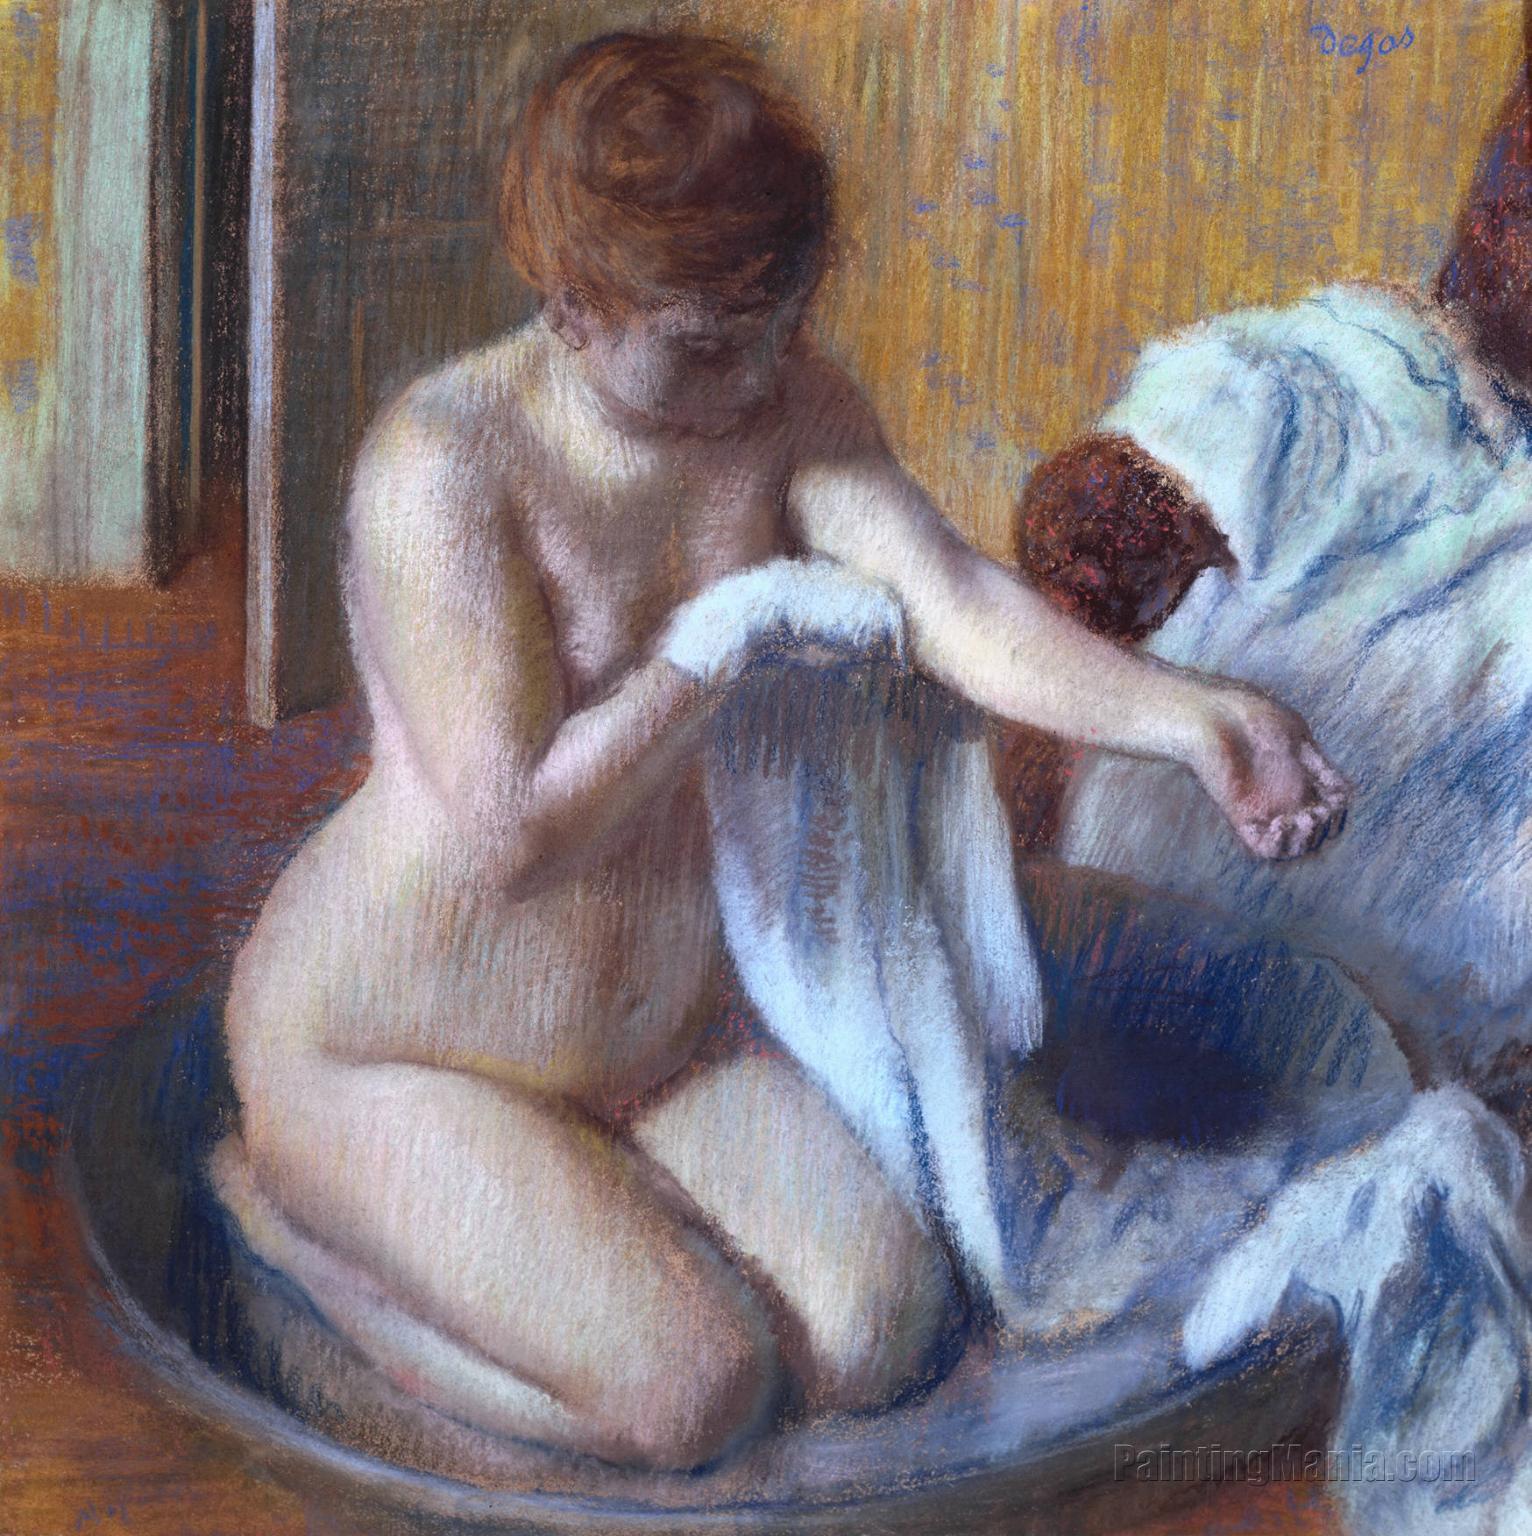 Woman in a Tub (Femme au bain)